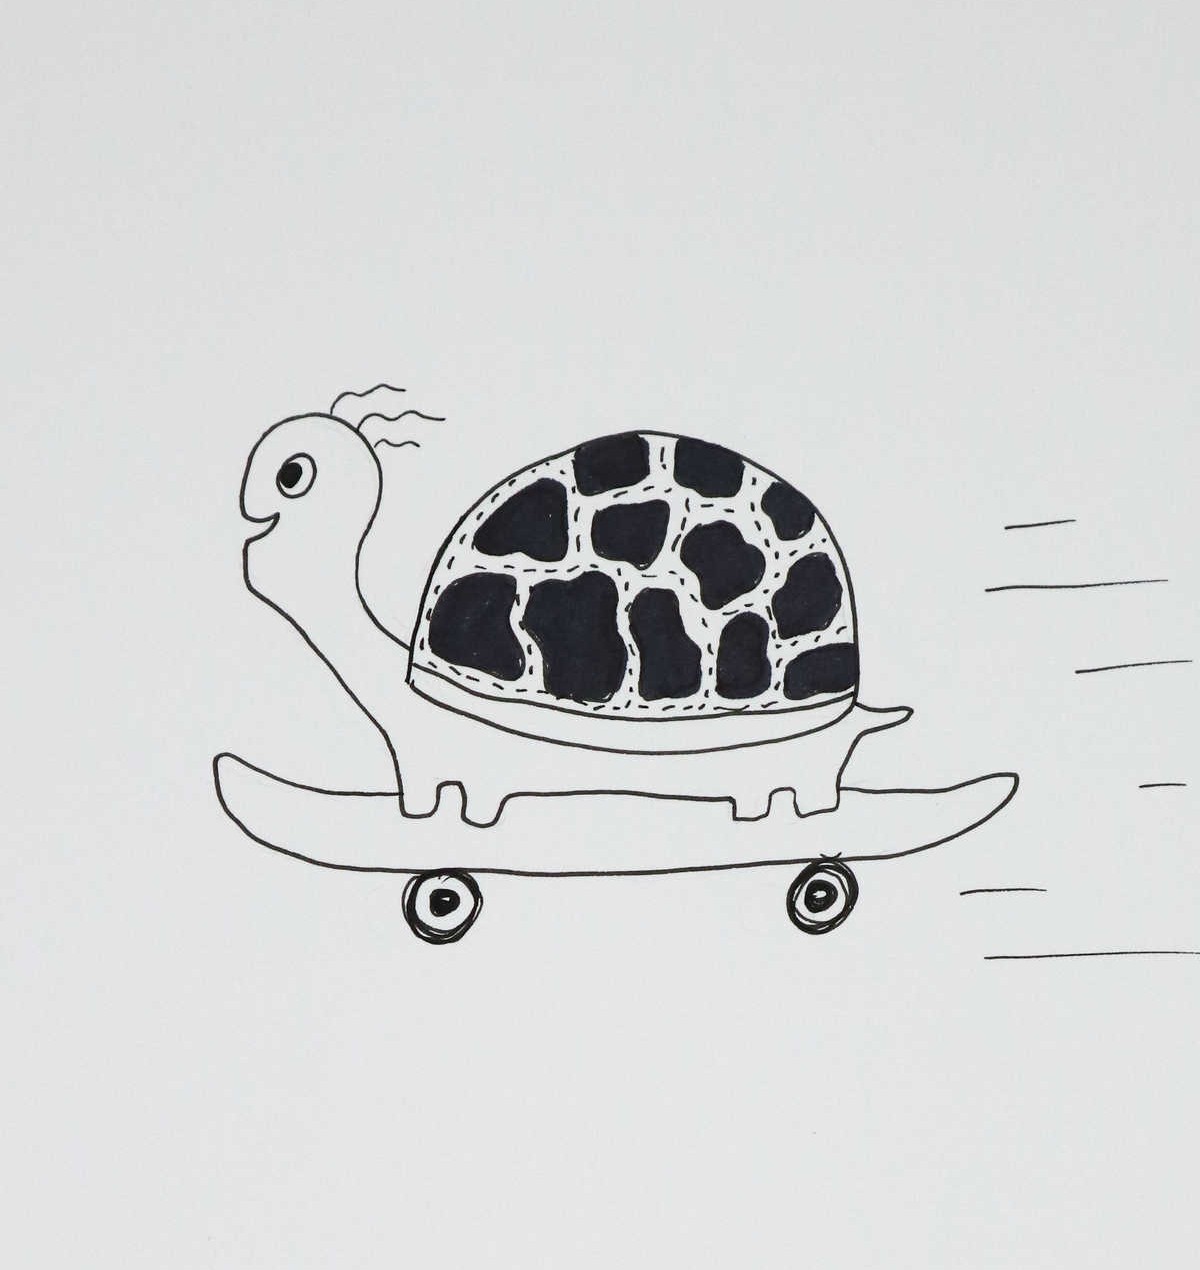 Skateboarding Turtle